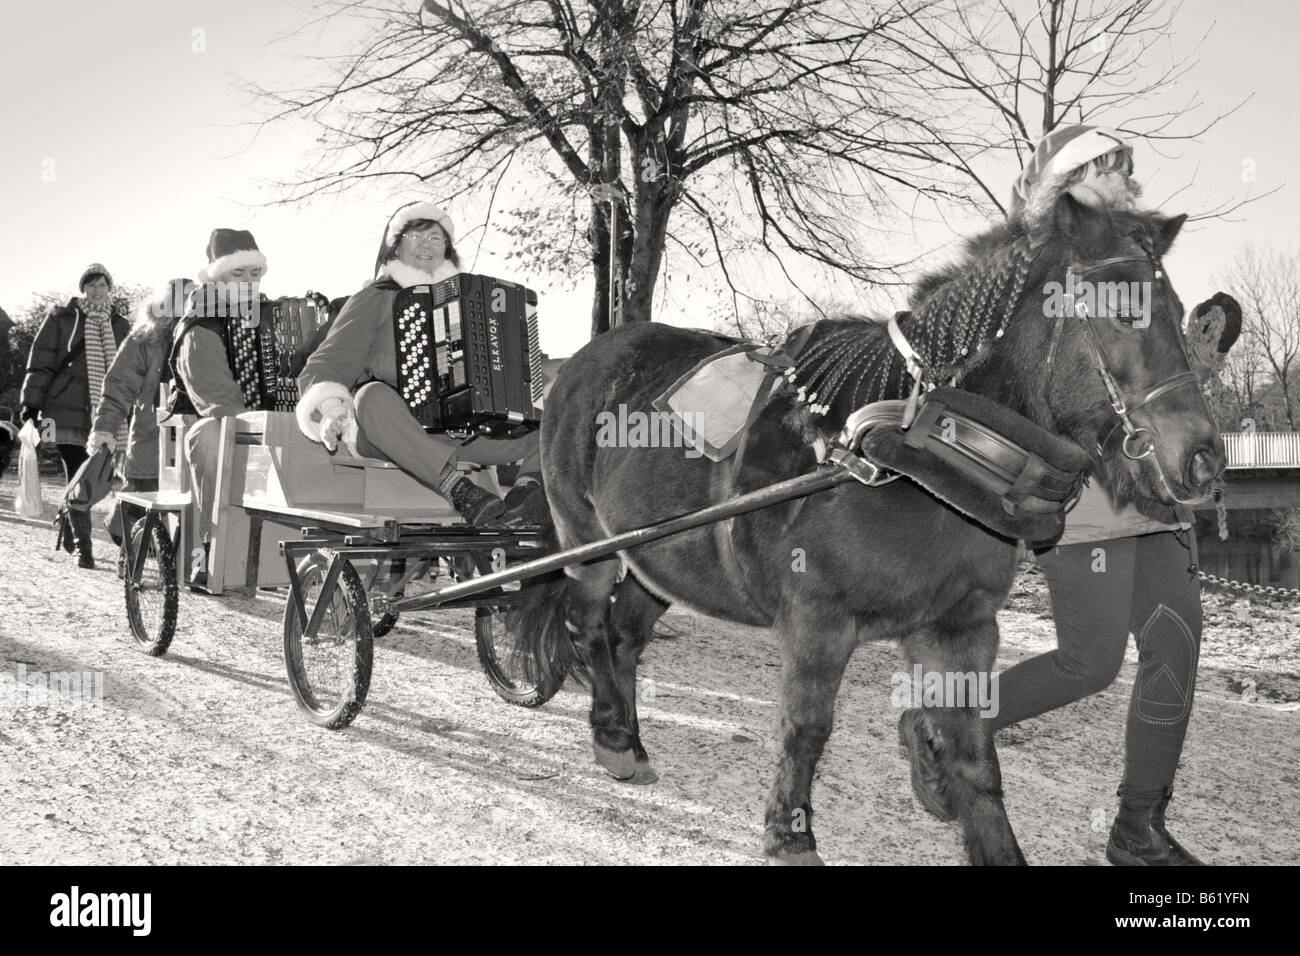 Santa claus parade with horse wagon at swedish traditional Christmas celebration svensk tomteparad med häst och vagn s/v b/w Stock Photo